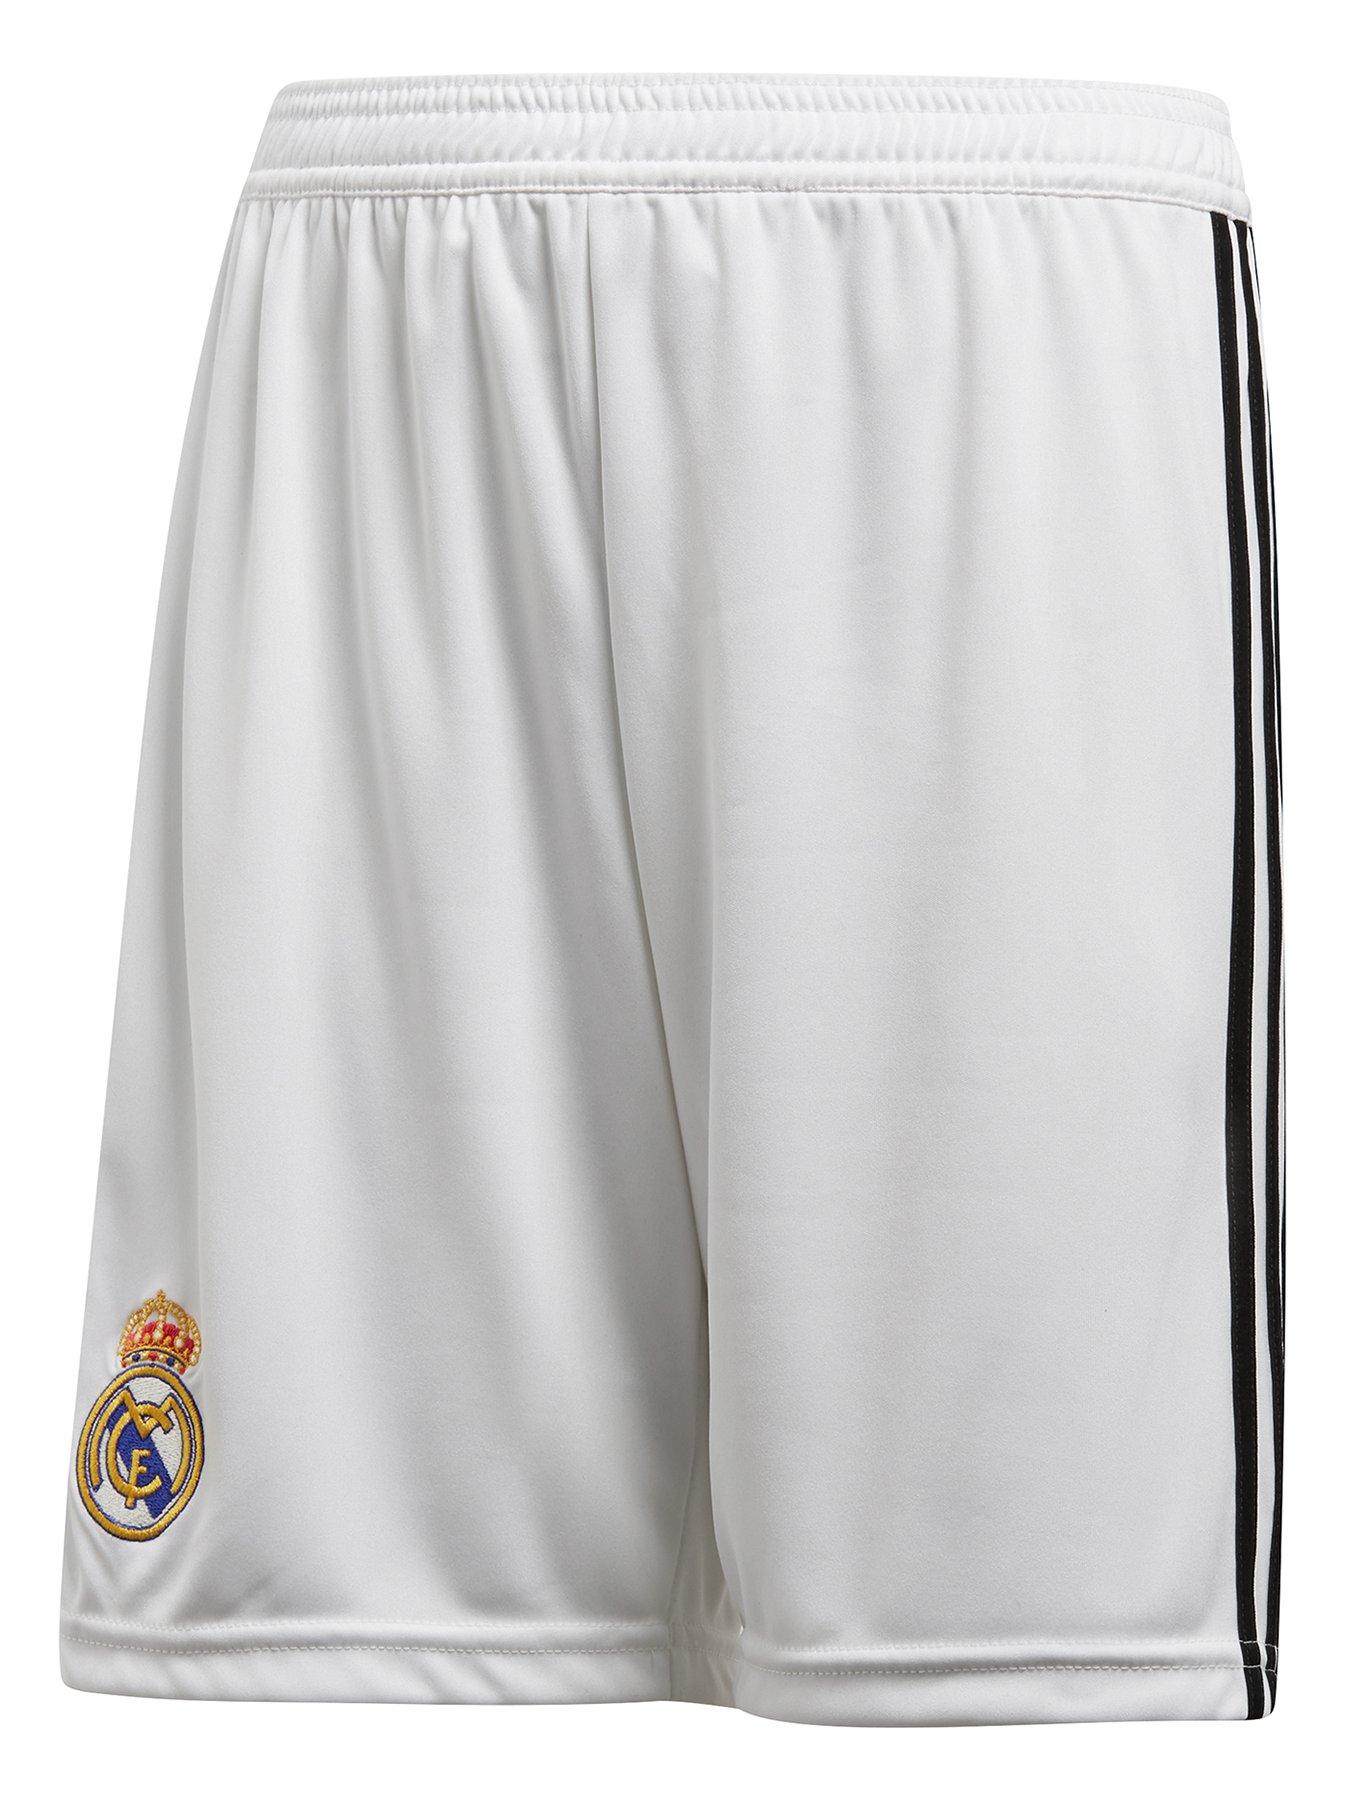 Eee0e46436 Real Madrid Away Kit 18 19 Roblox Izmirhabergazetesi Com - inter milan 1819 home kit ls roblox